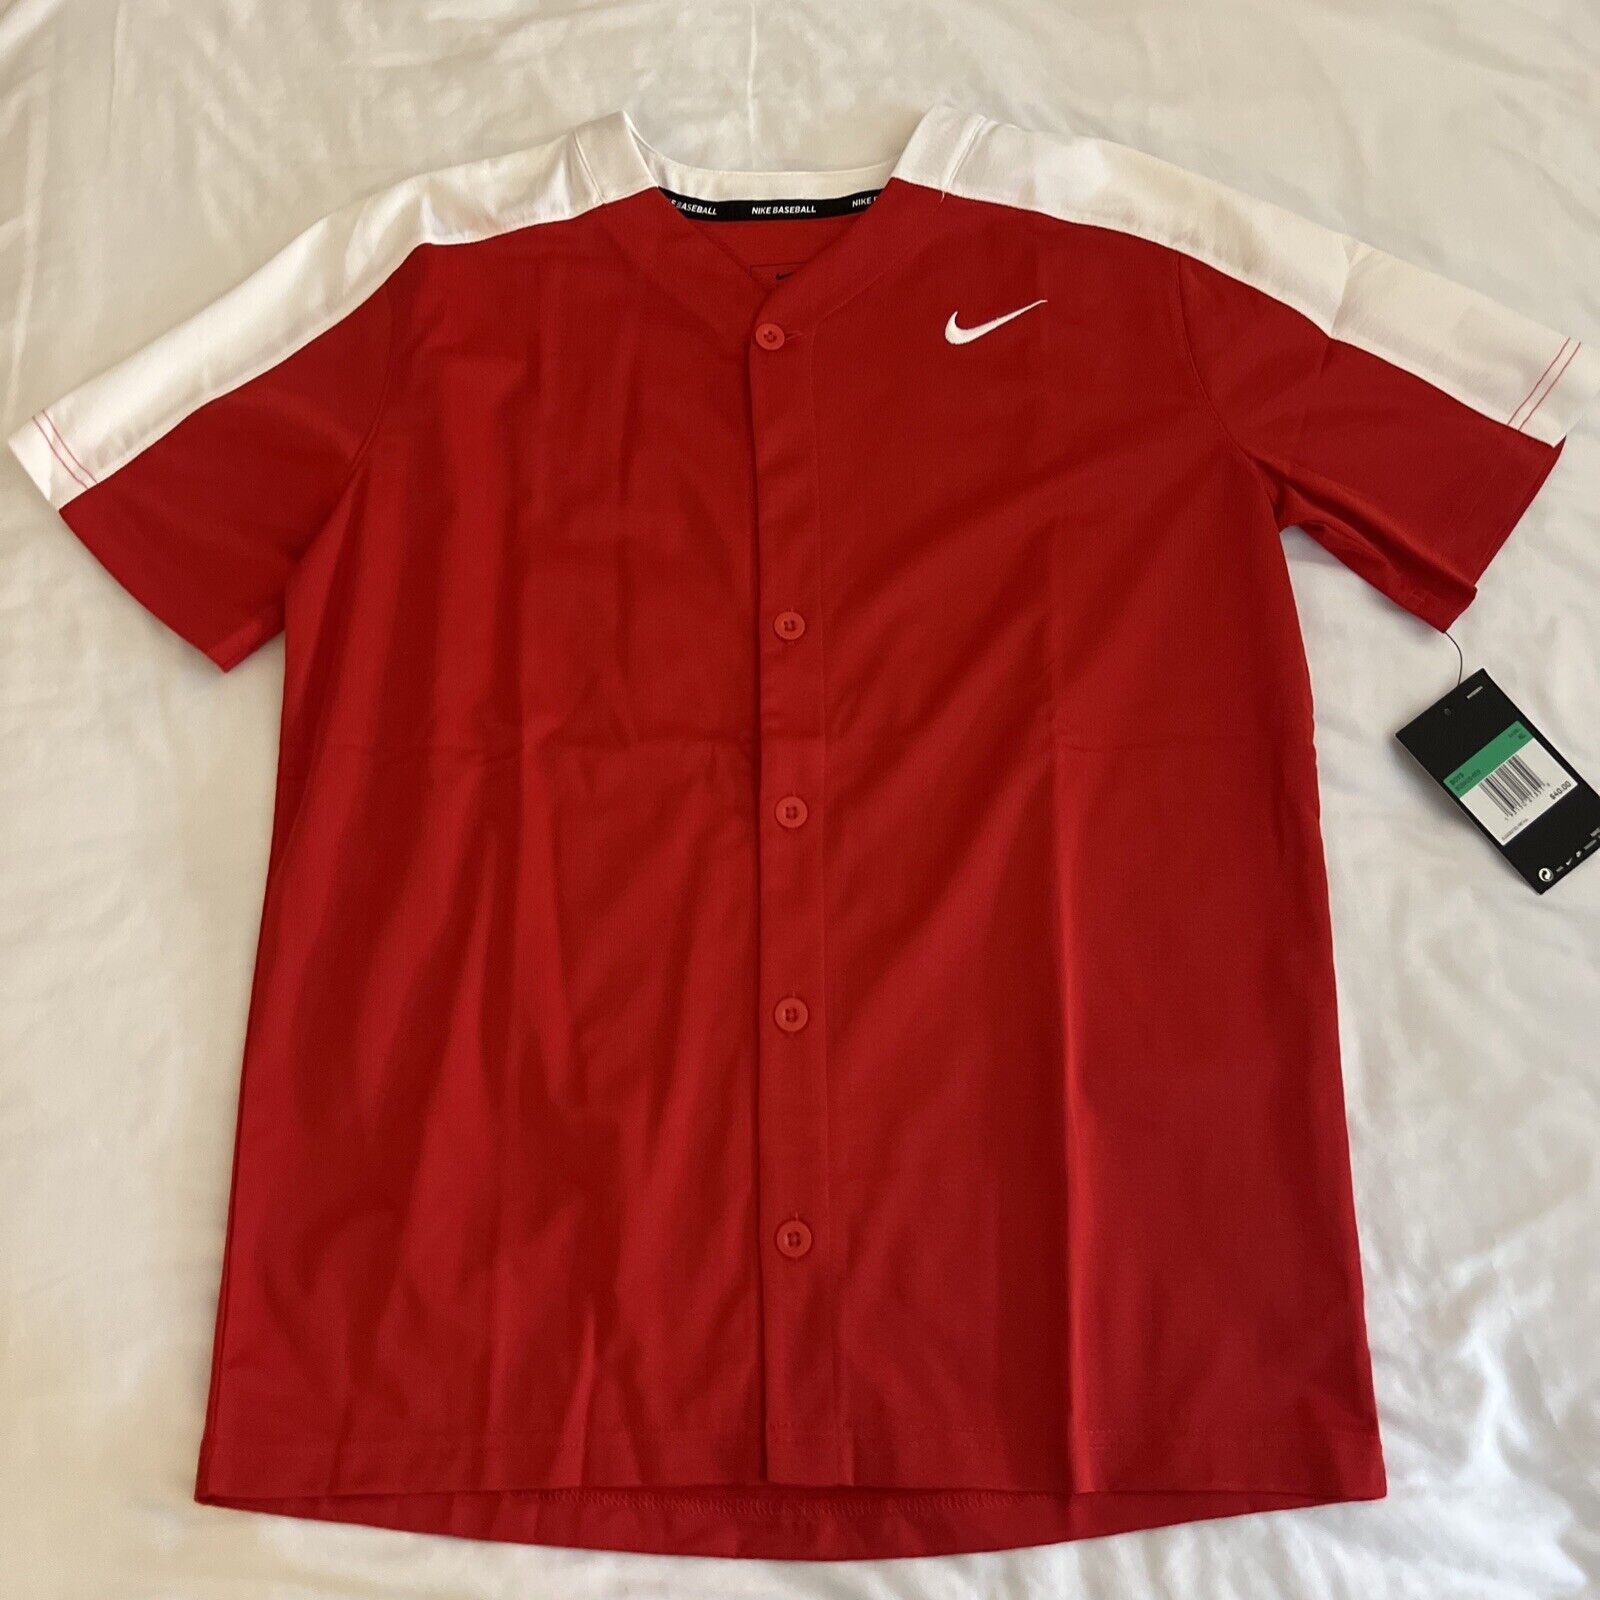 Nwt Nike Baseball Youth Boy's Button Jersey Red Size Xl Bq6428 B8